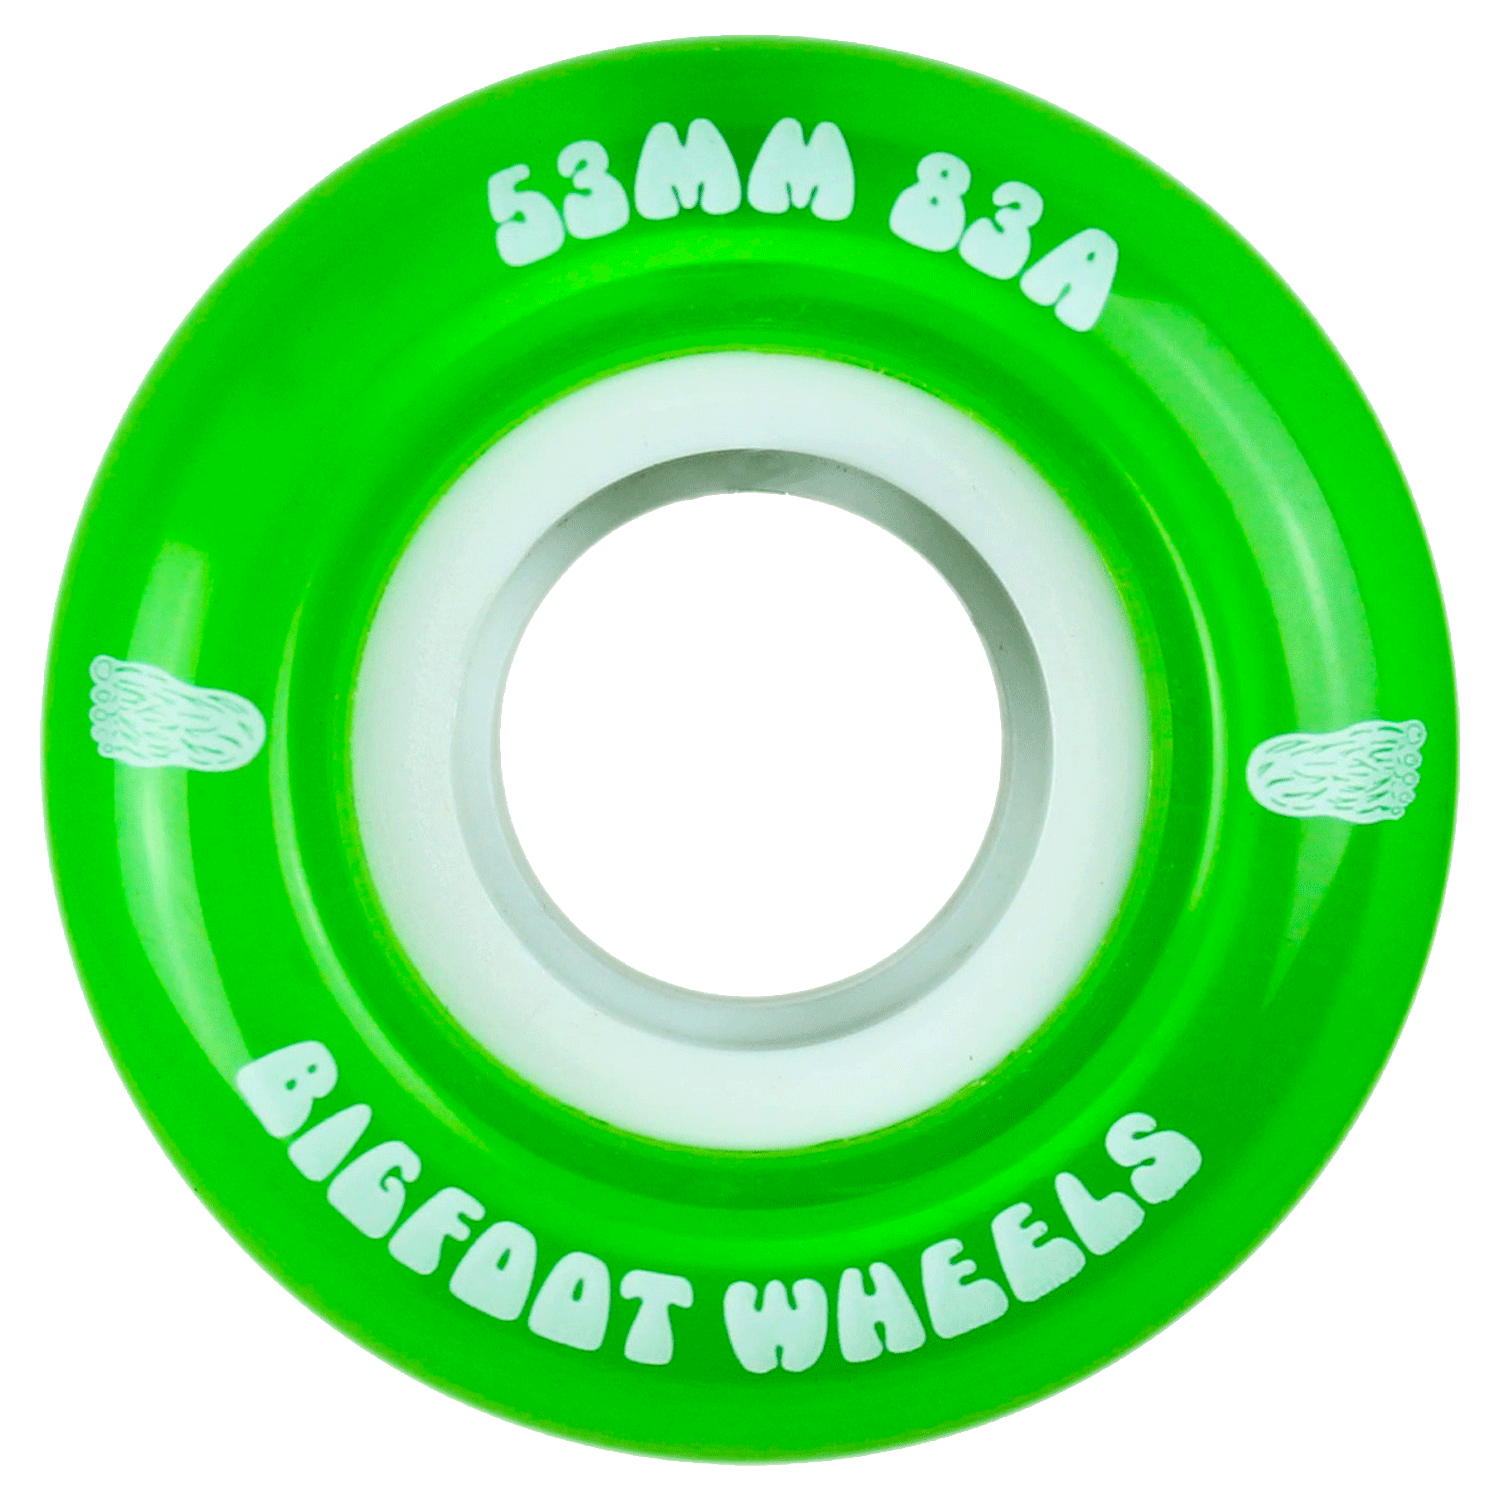 Soft Cruiser Filmer Skateboard Wheels - Bigfoot Wheels